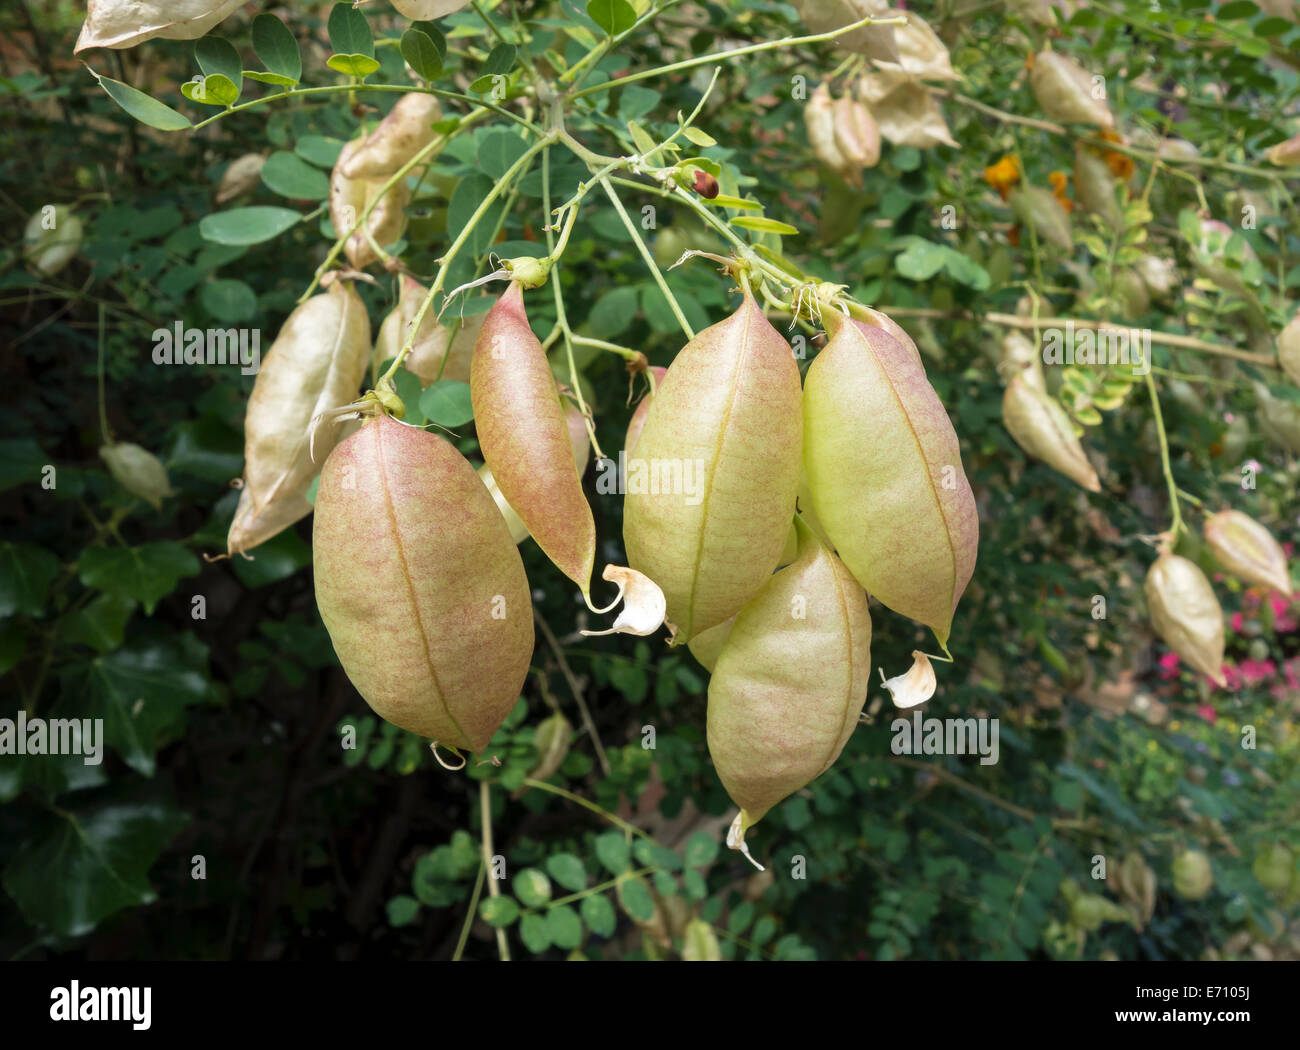 Common bladder senna inflated fruits Stock Photo